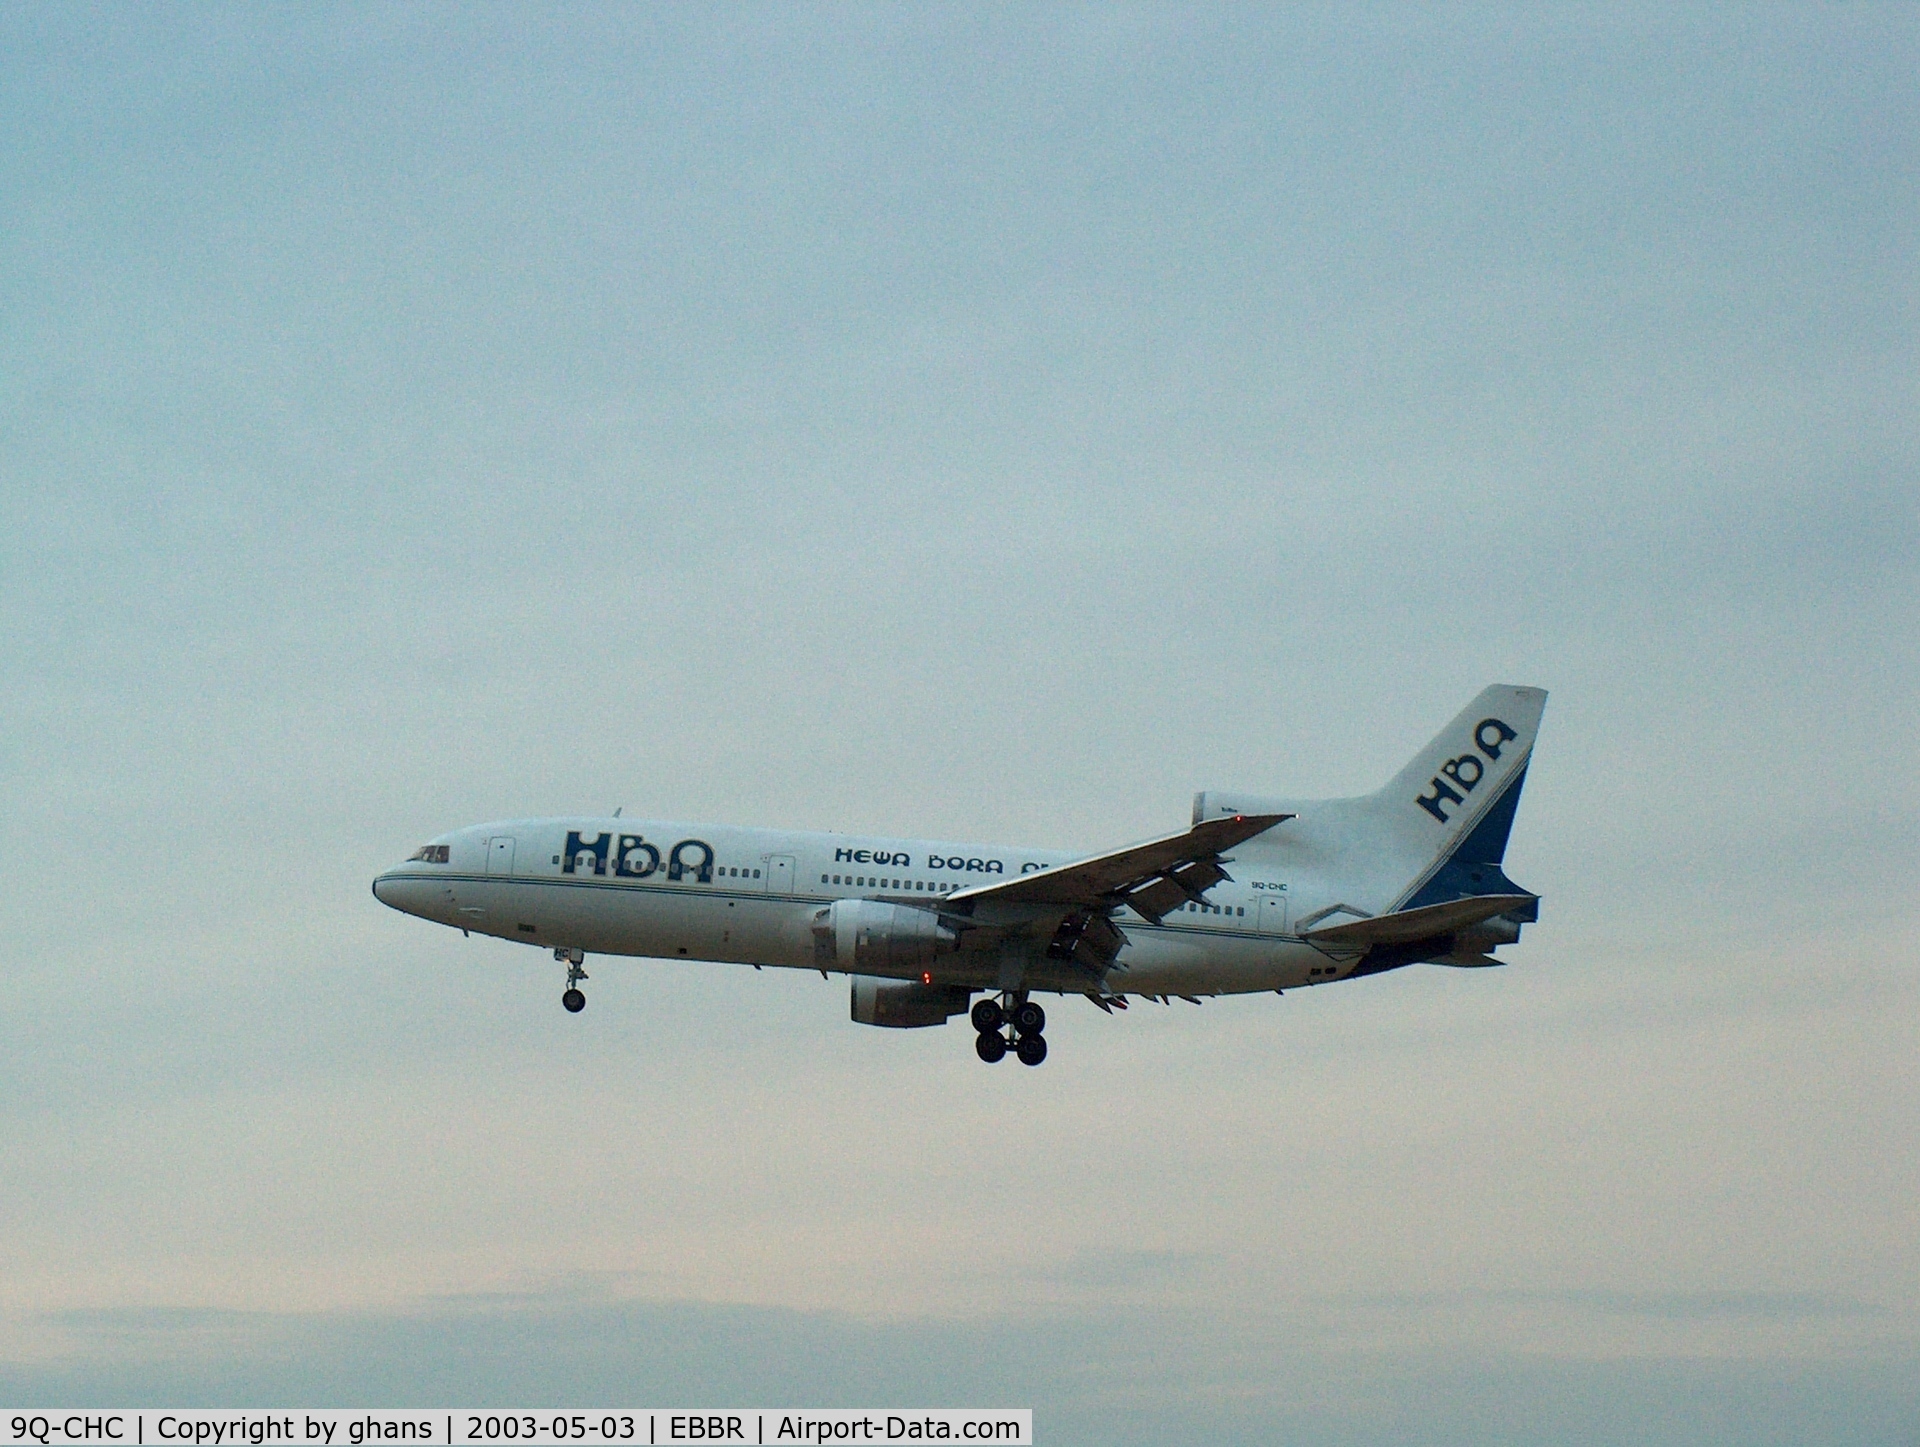 9Q-CHC, 1981 Lockheed L-1011-385-3 Tristar 500 C/N 193H-1209, Brussels runway 25L